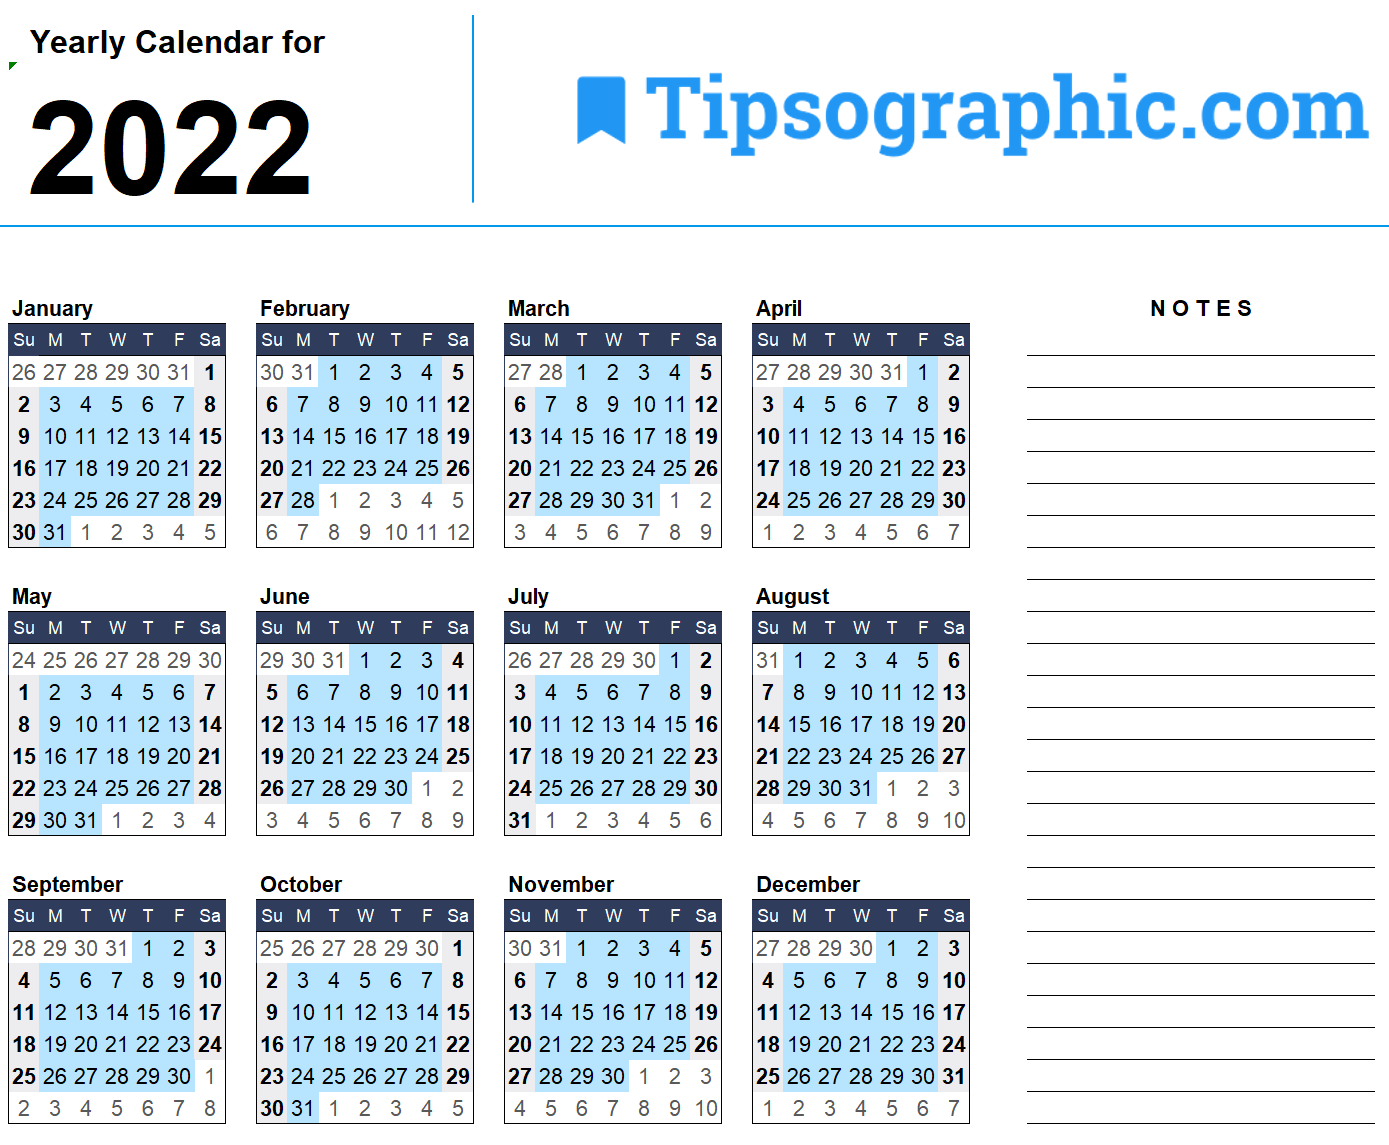 FREE DOWNLOAD > 2022 Calendar Templates & Images